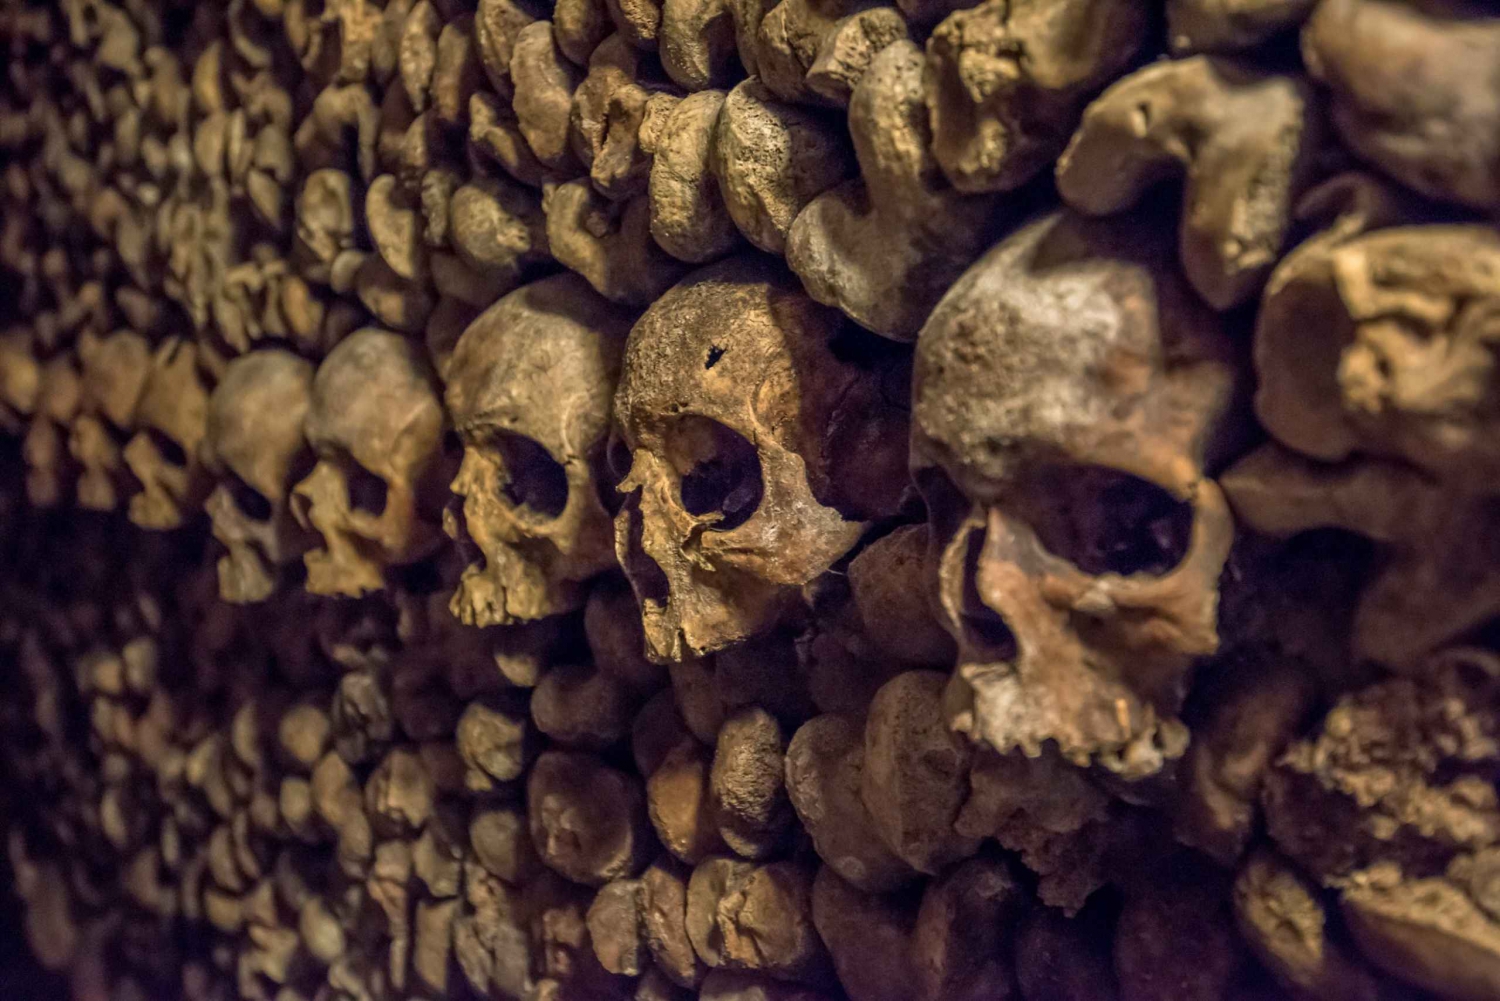 Explore-the-Catacombs